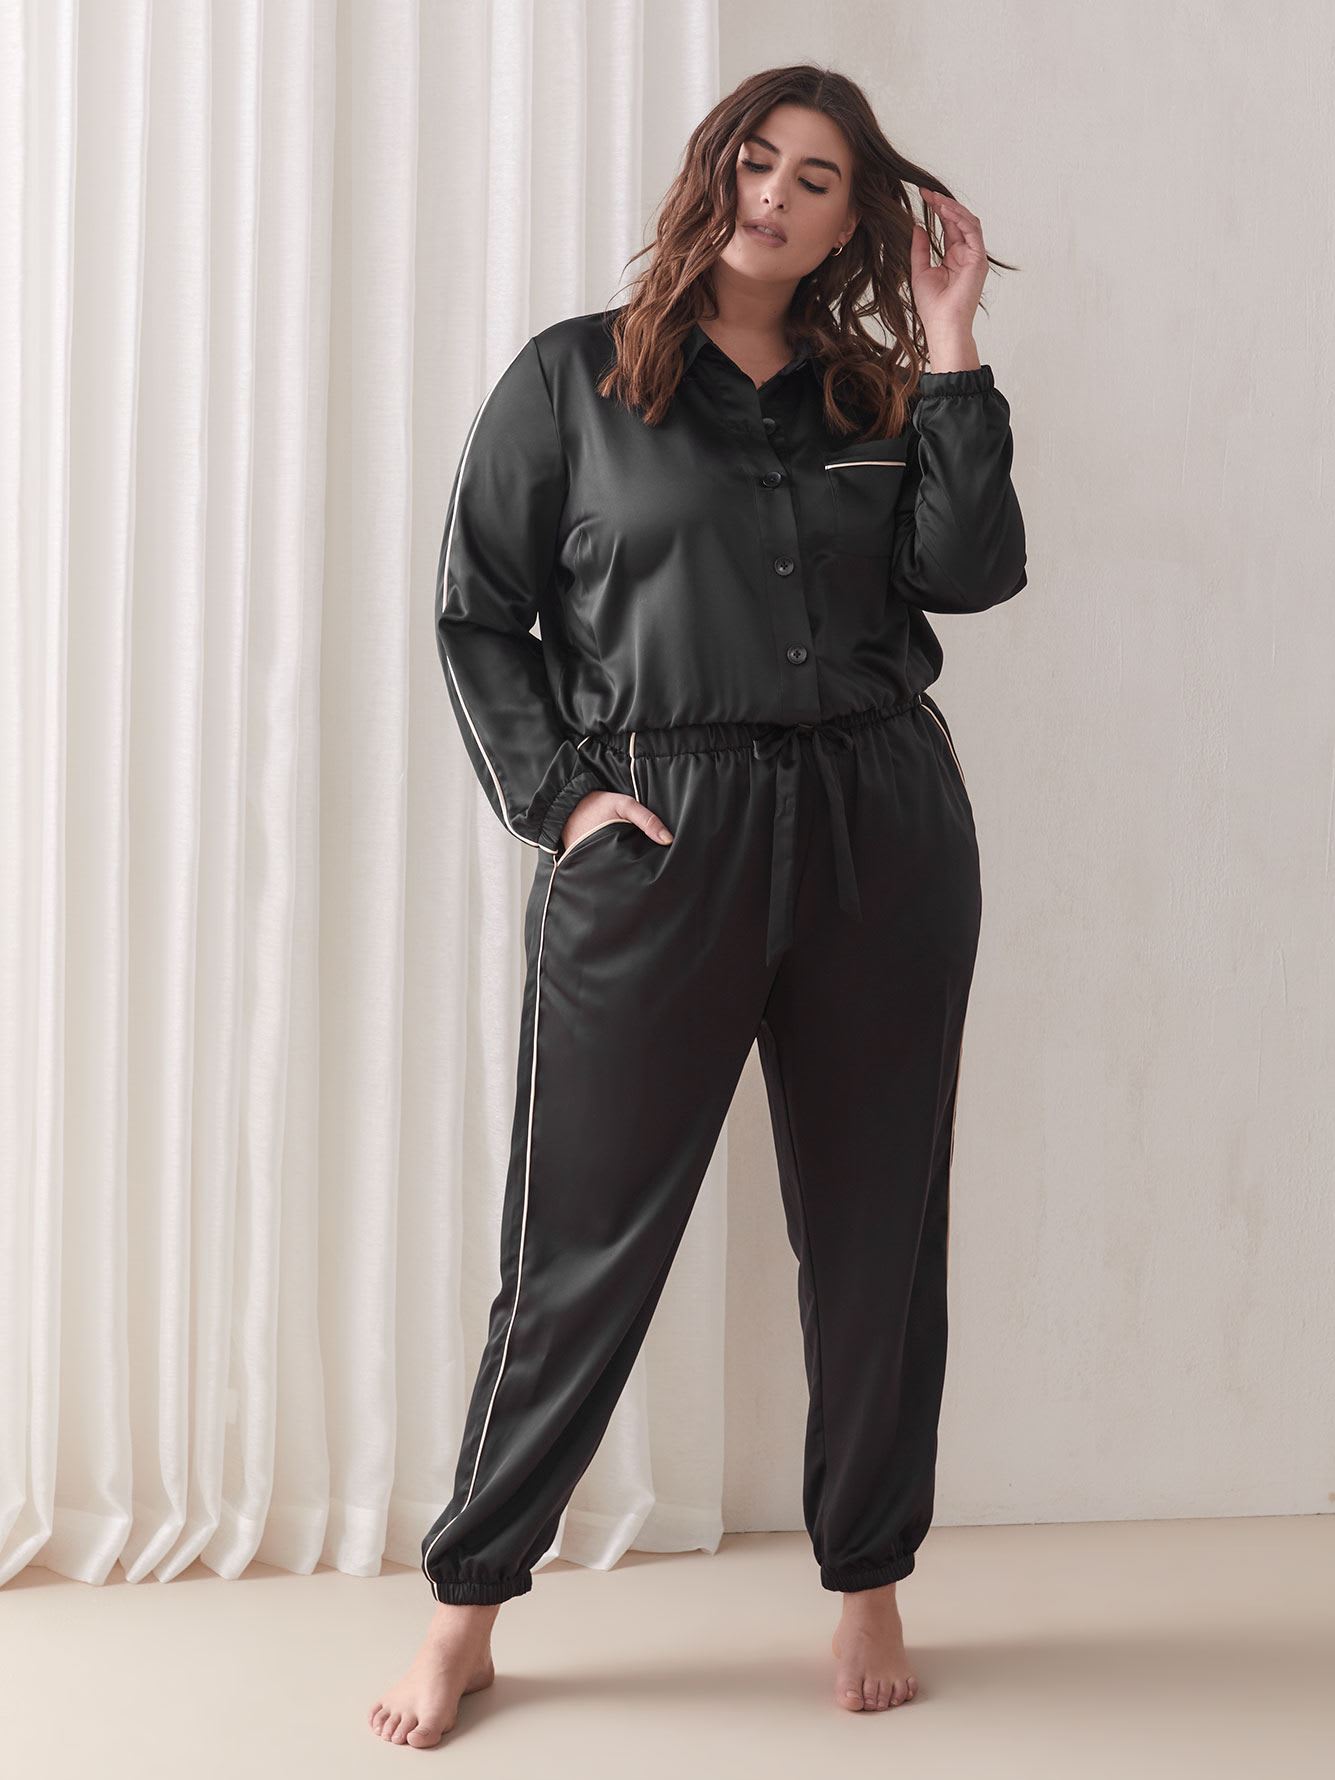 Pajama Crop Top with Piping Detail - Ashley Graham | Penningtons